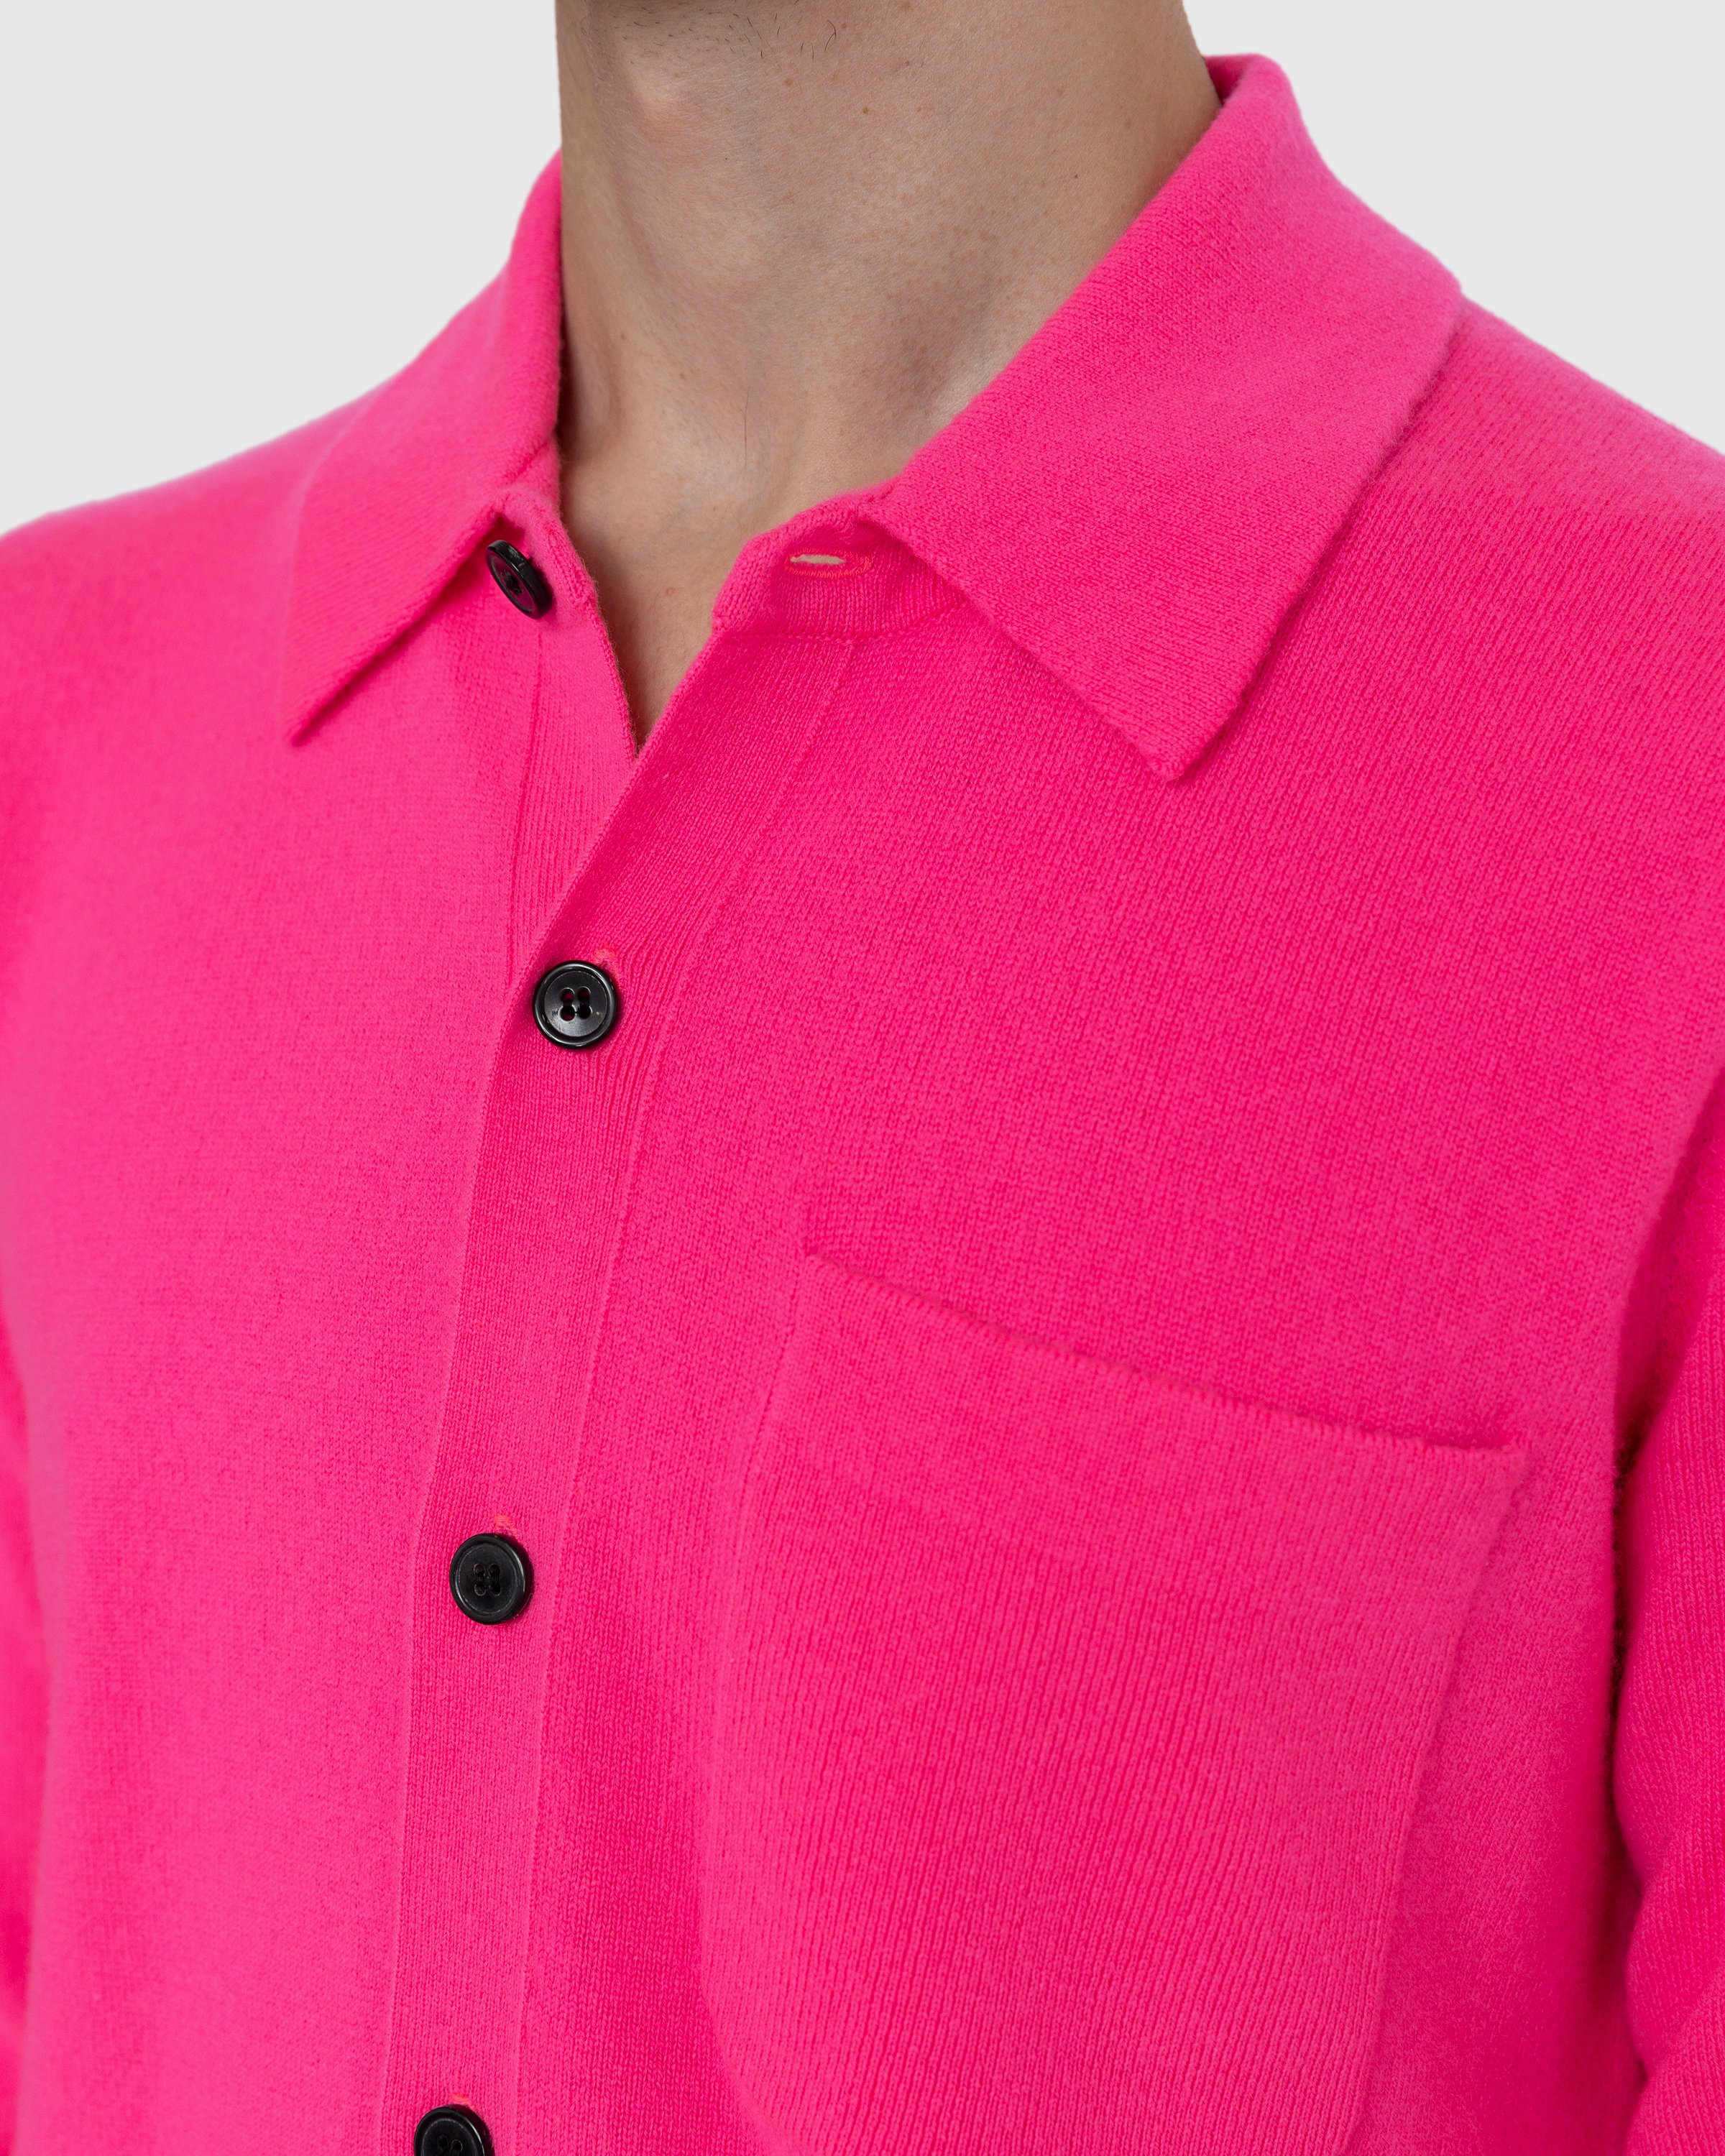 Dries van Noten - Never Cardigan - Clothing - Pink - Image 6